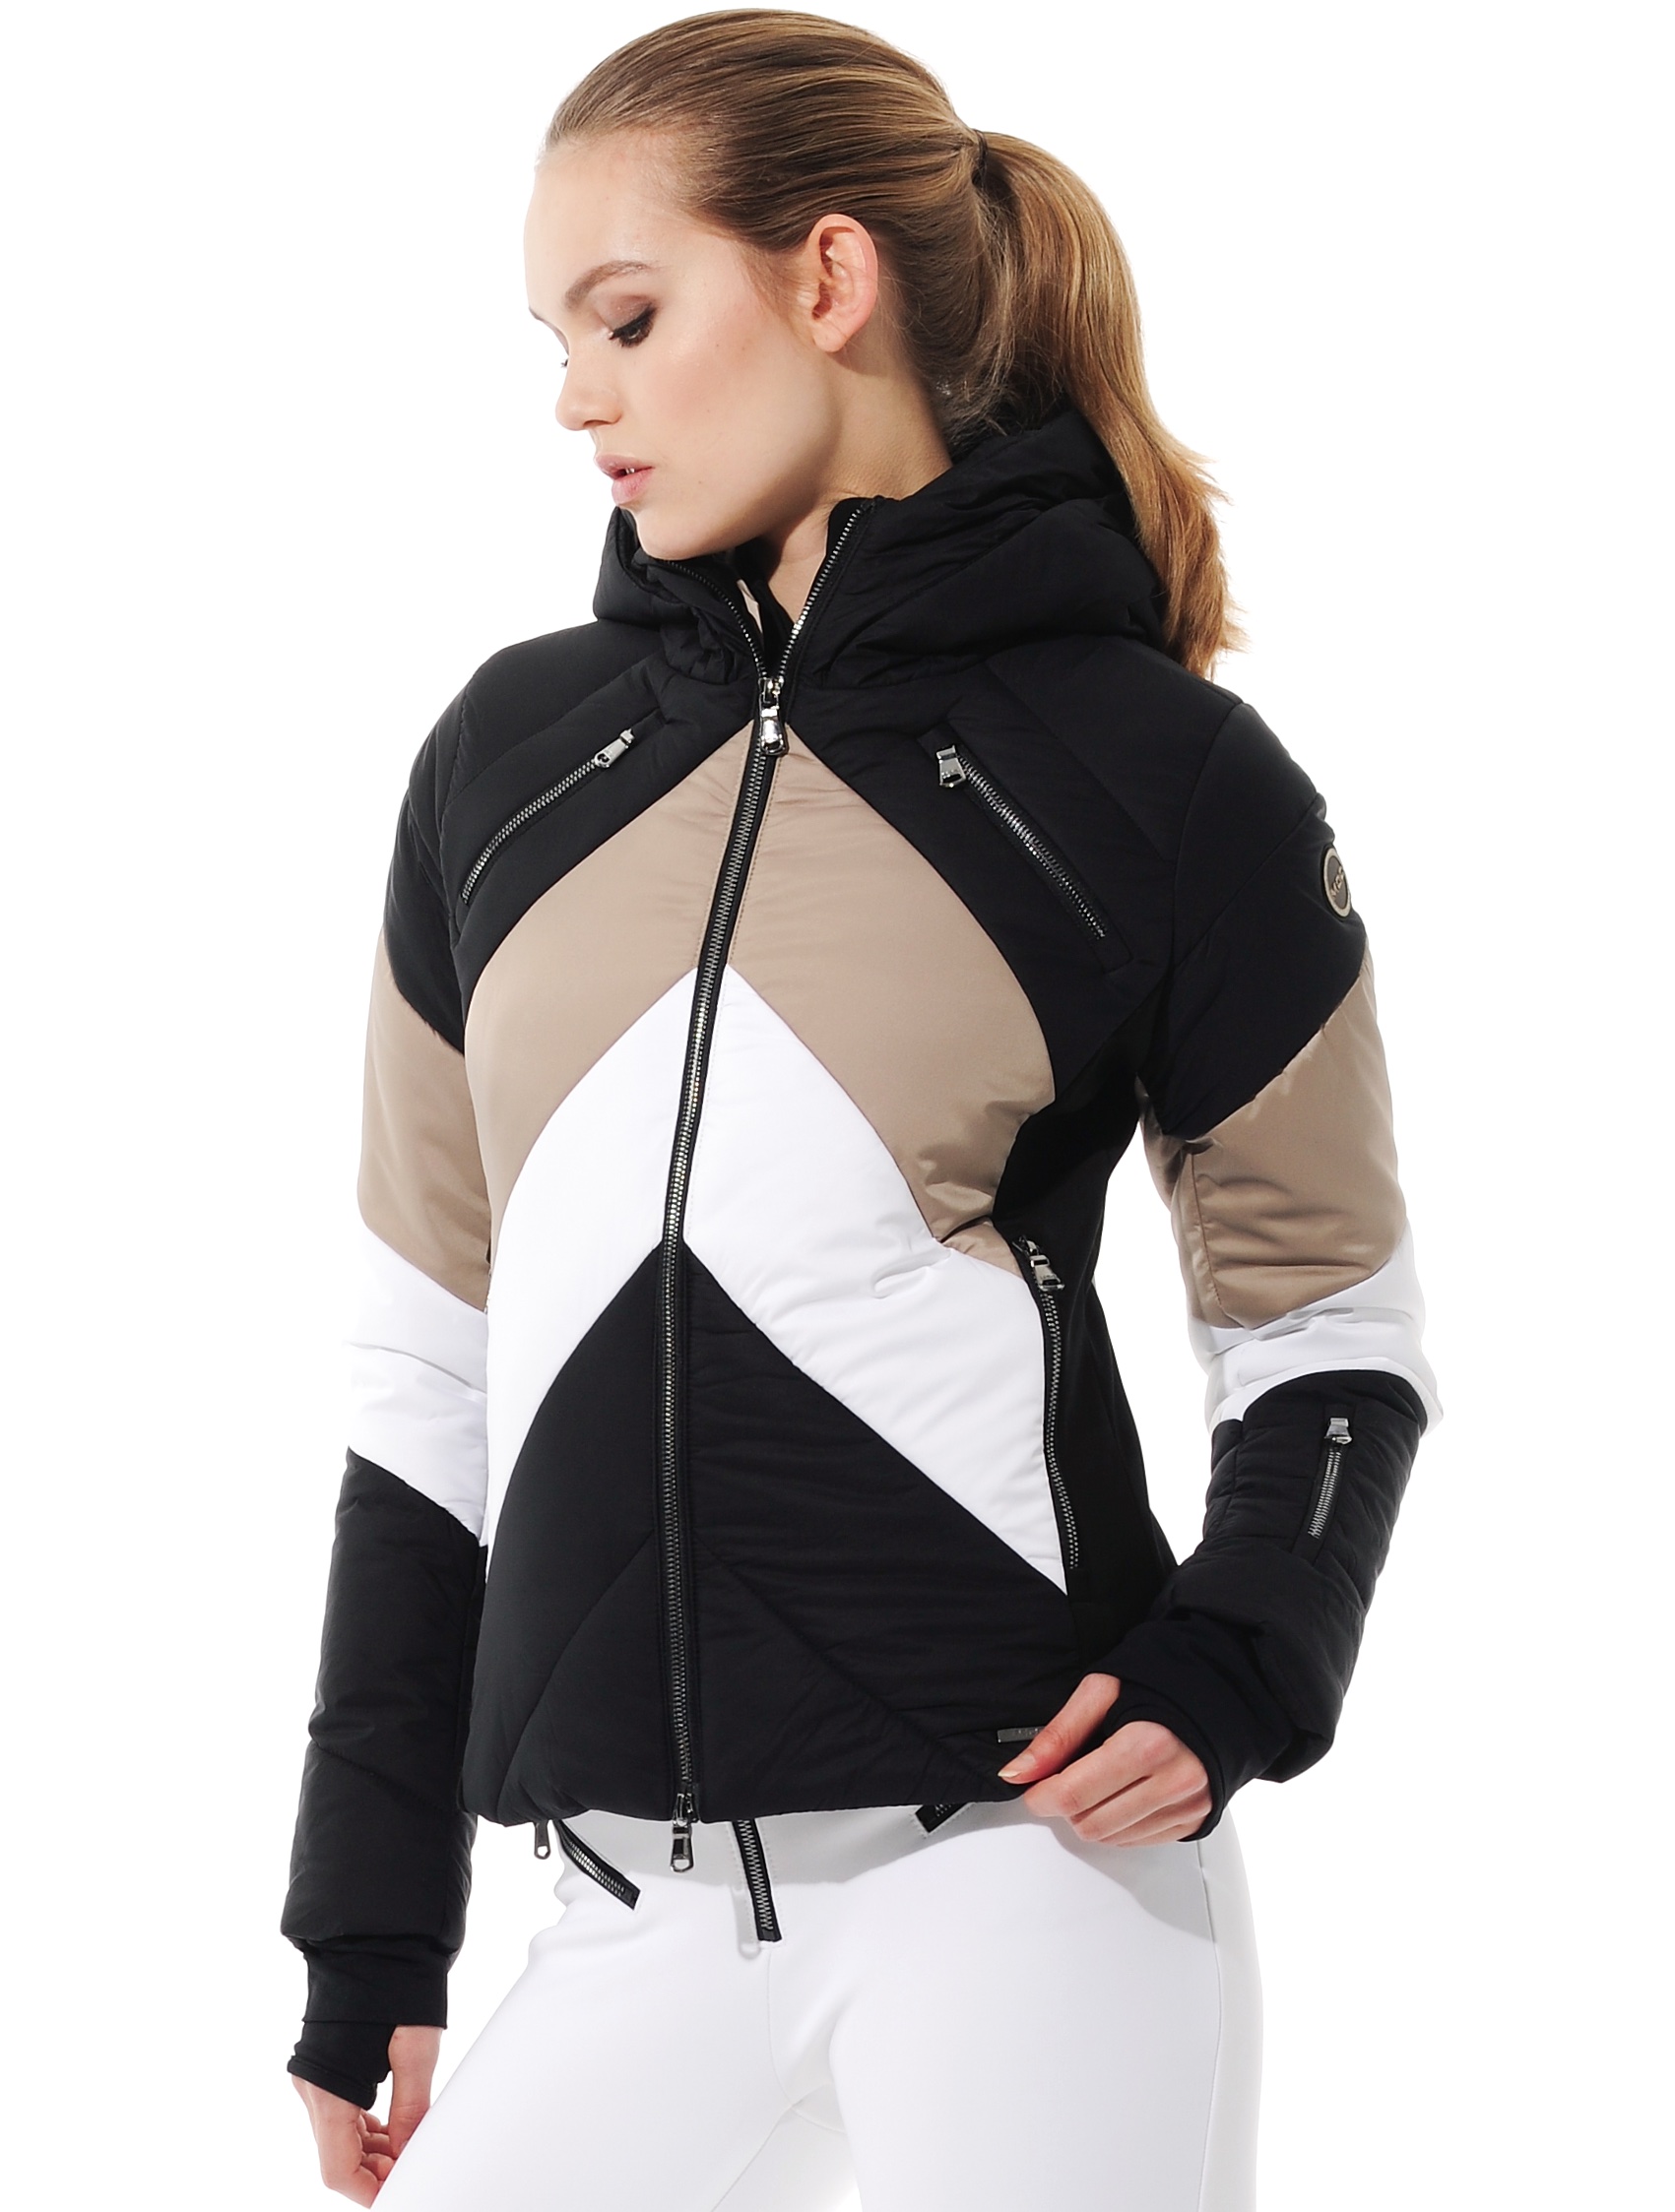 stretch ski jacket with 4way stretch side panels black/taupe 